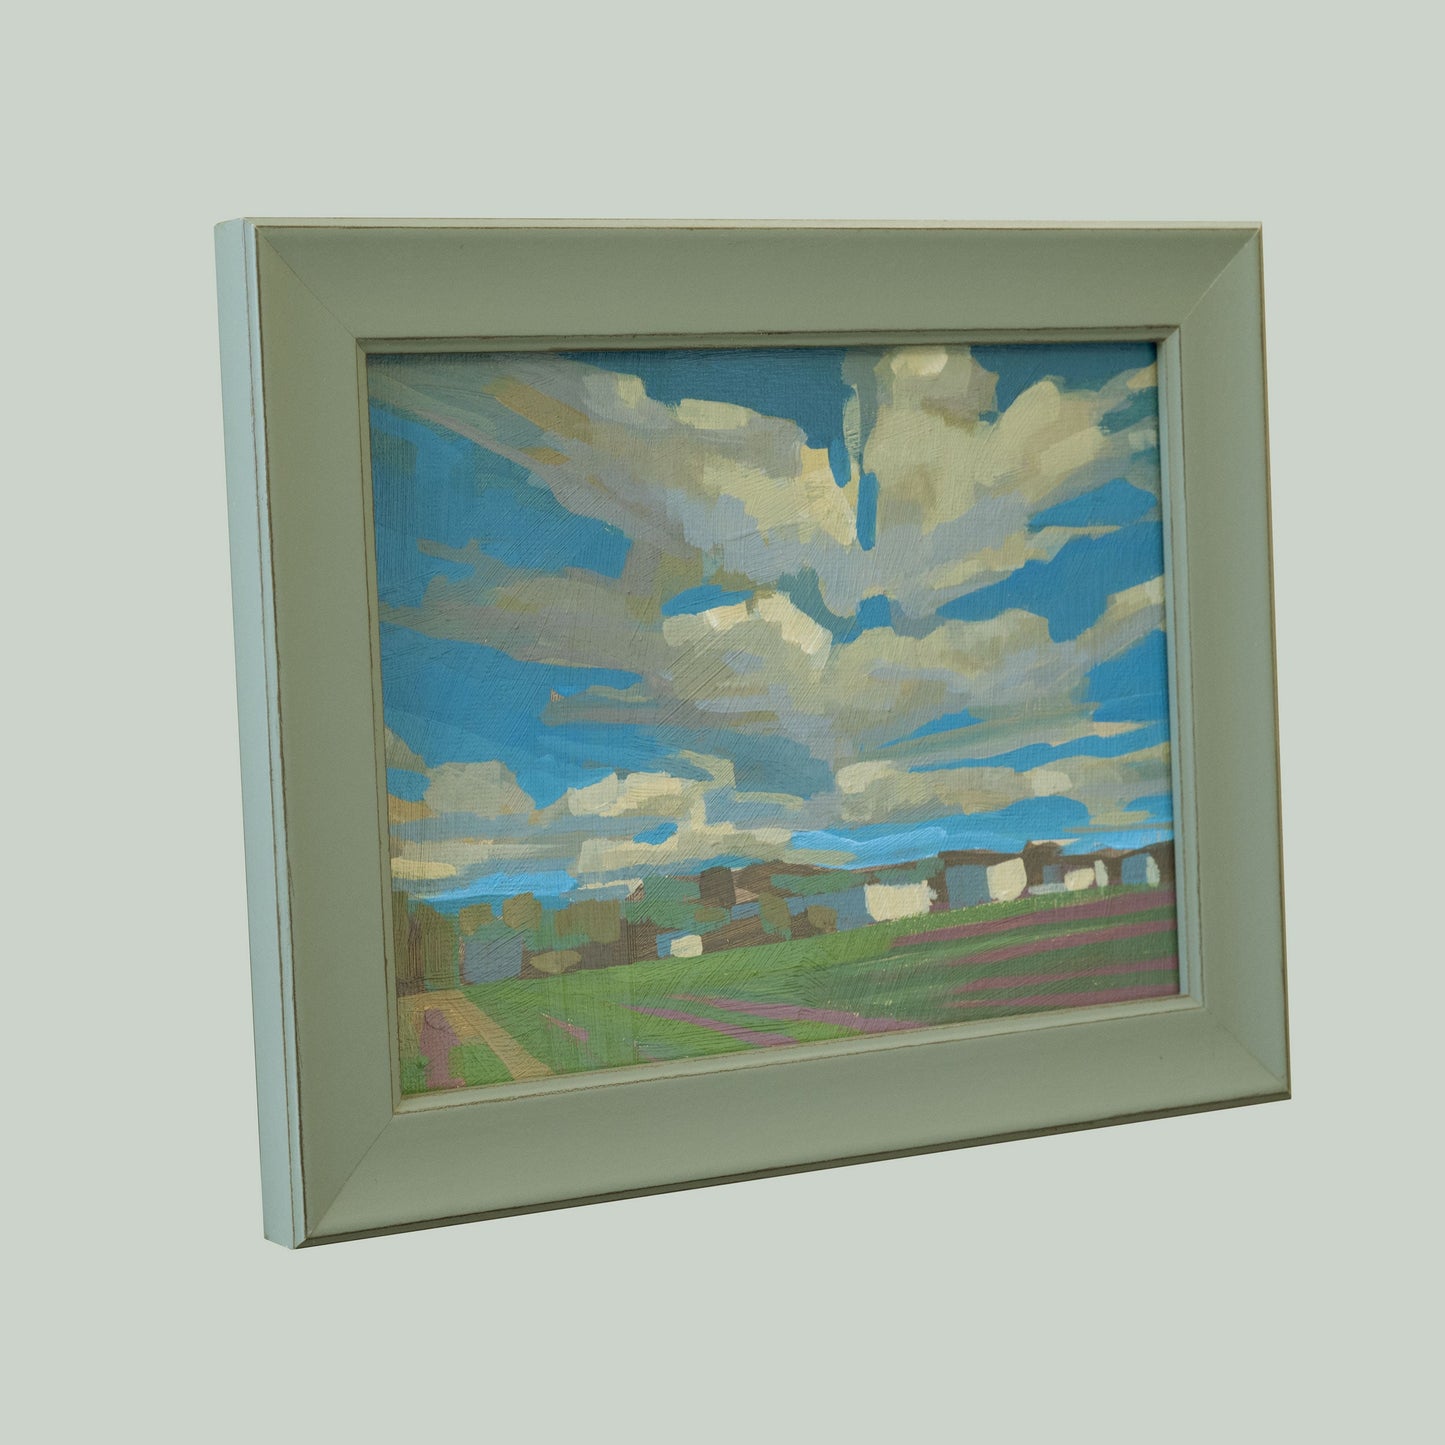 Hoard, unique, painting, hand-painted unique piece, 20 x 15 cm, with picture frame